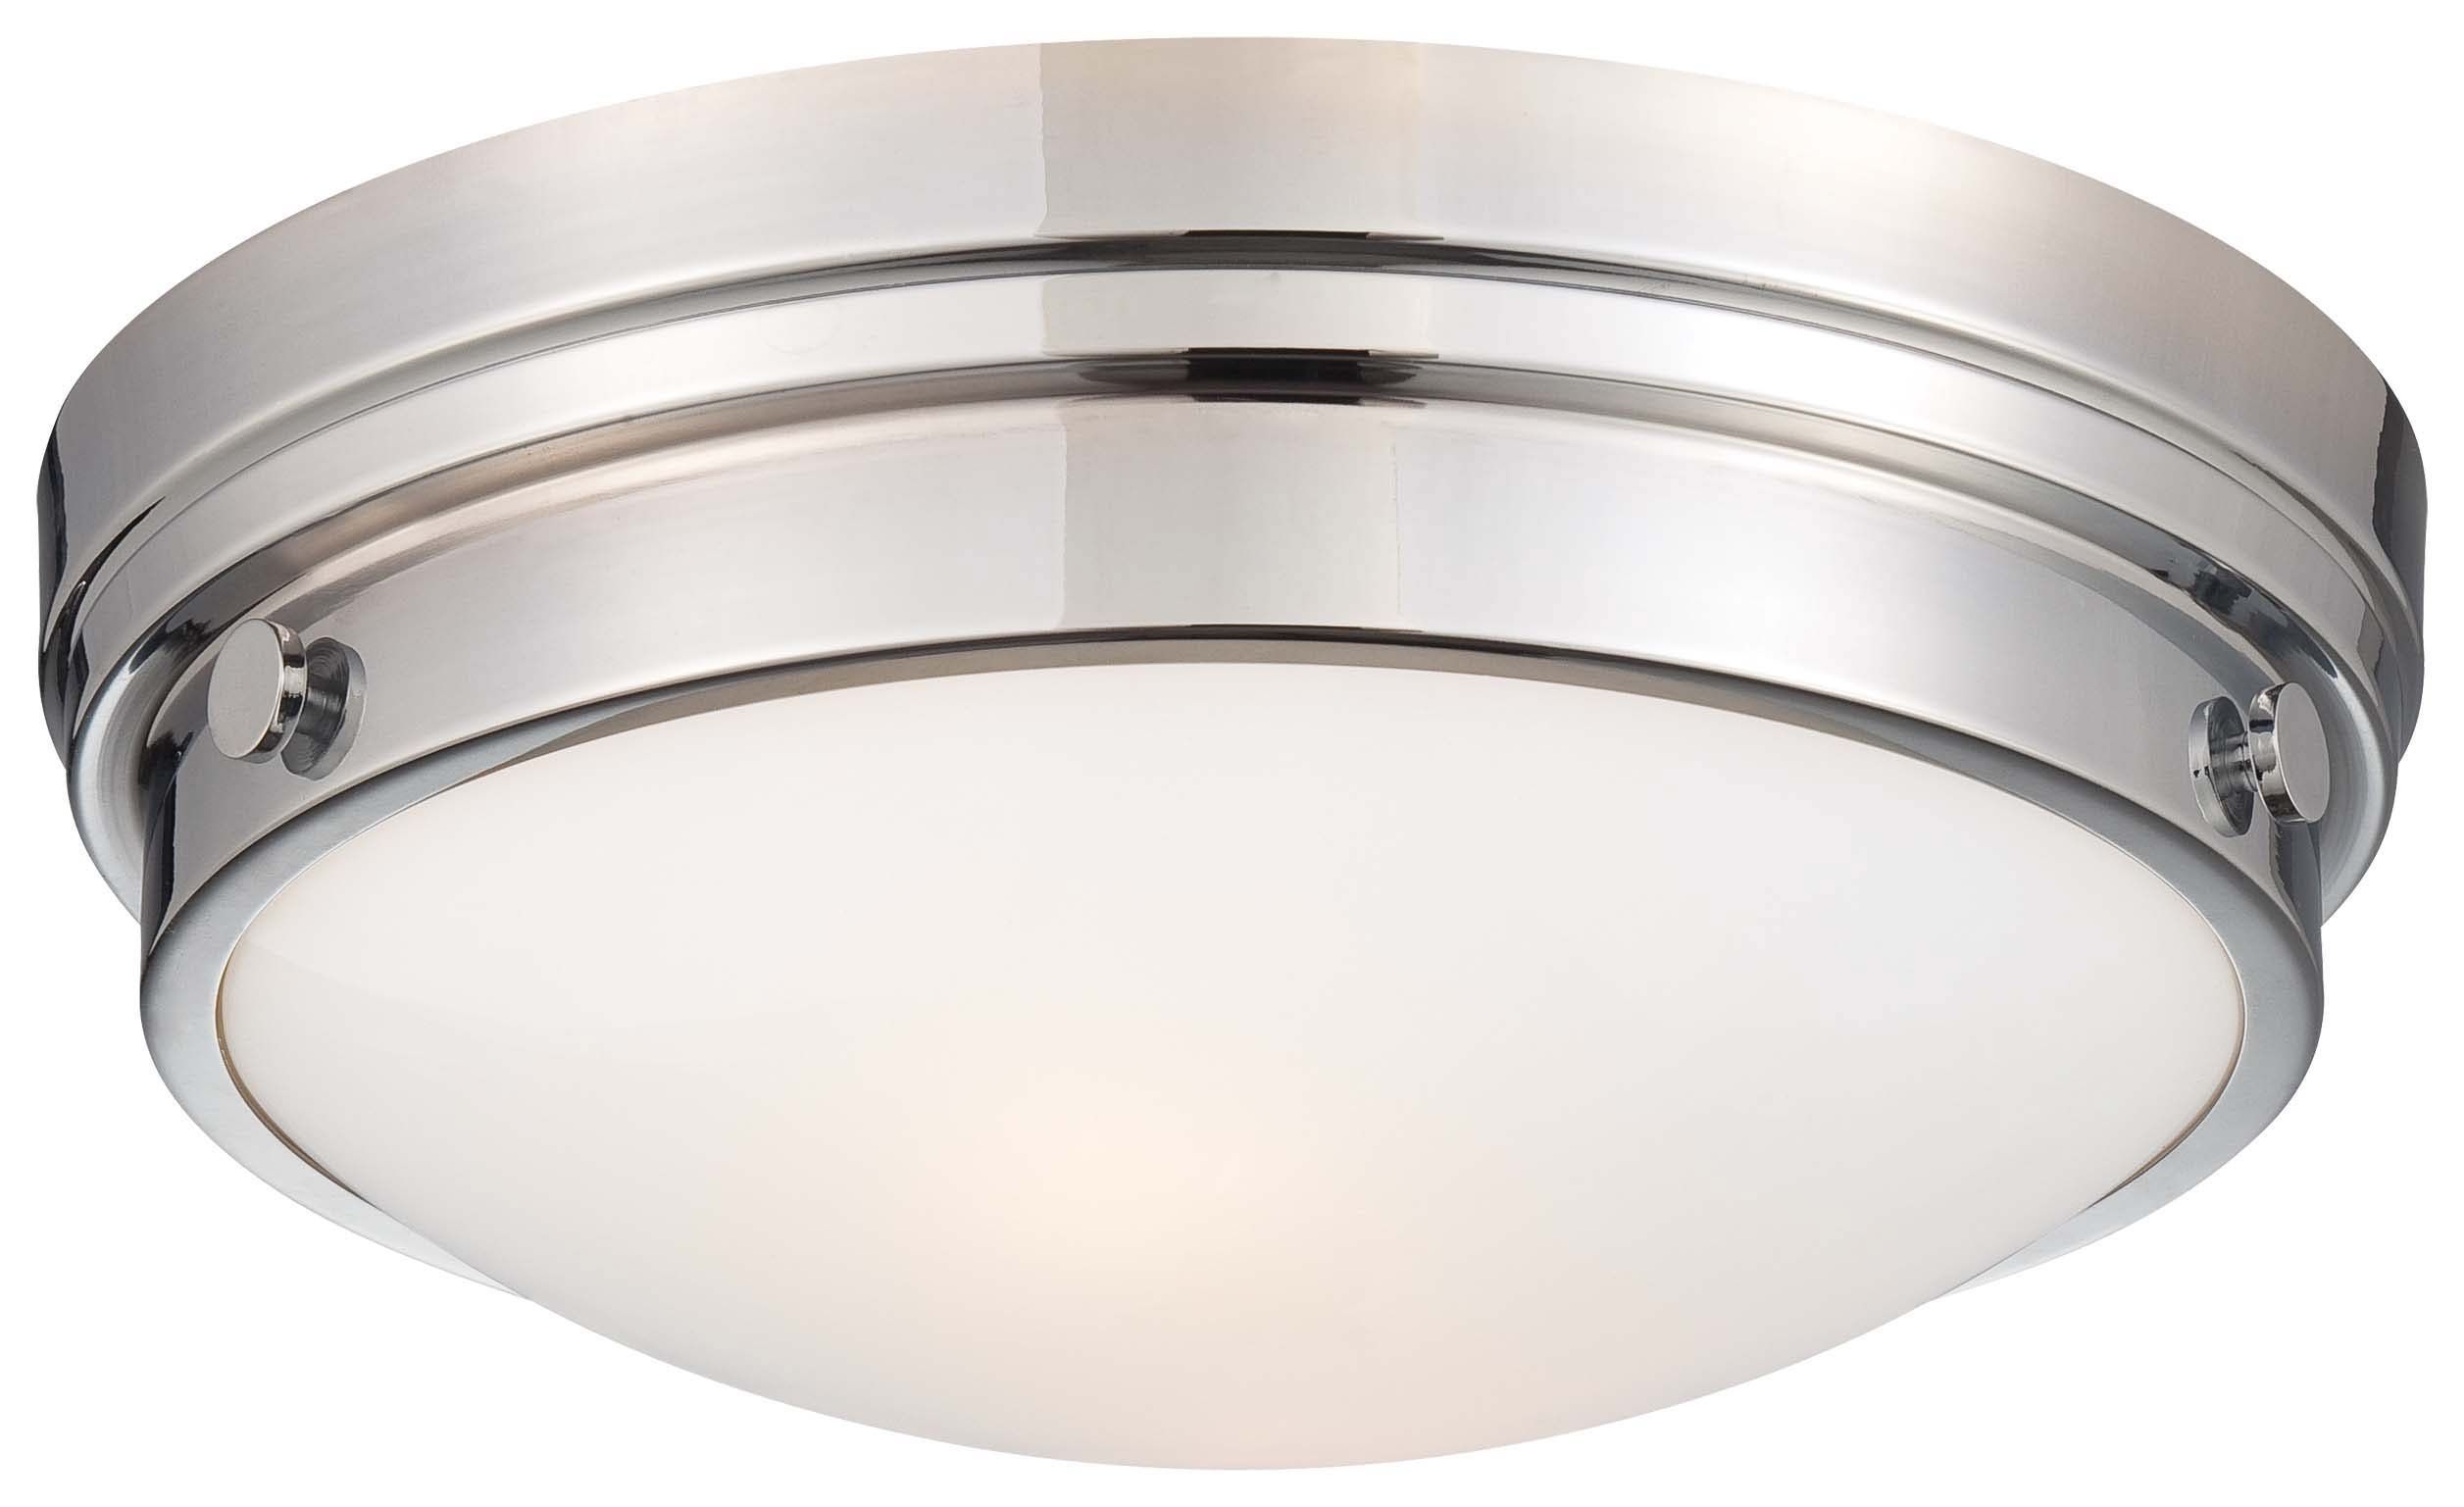 25 inch kitchen ceiling mount light